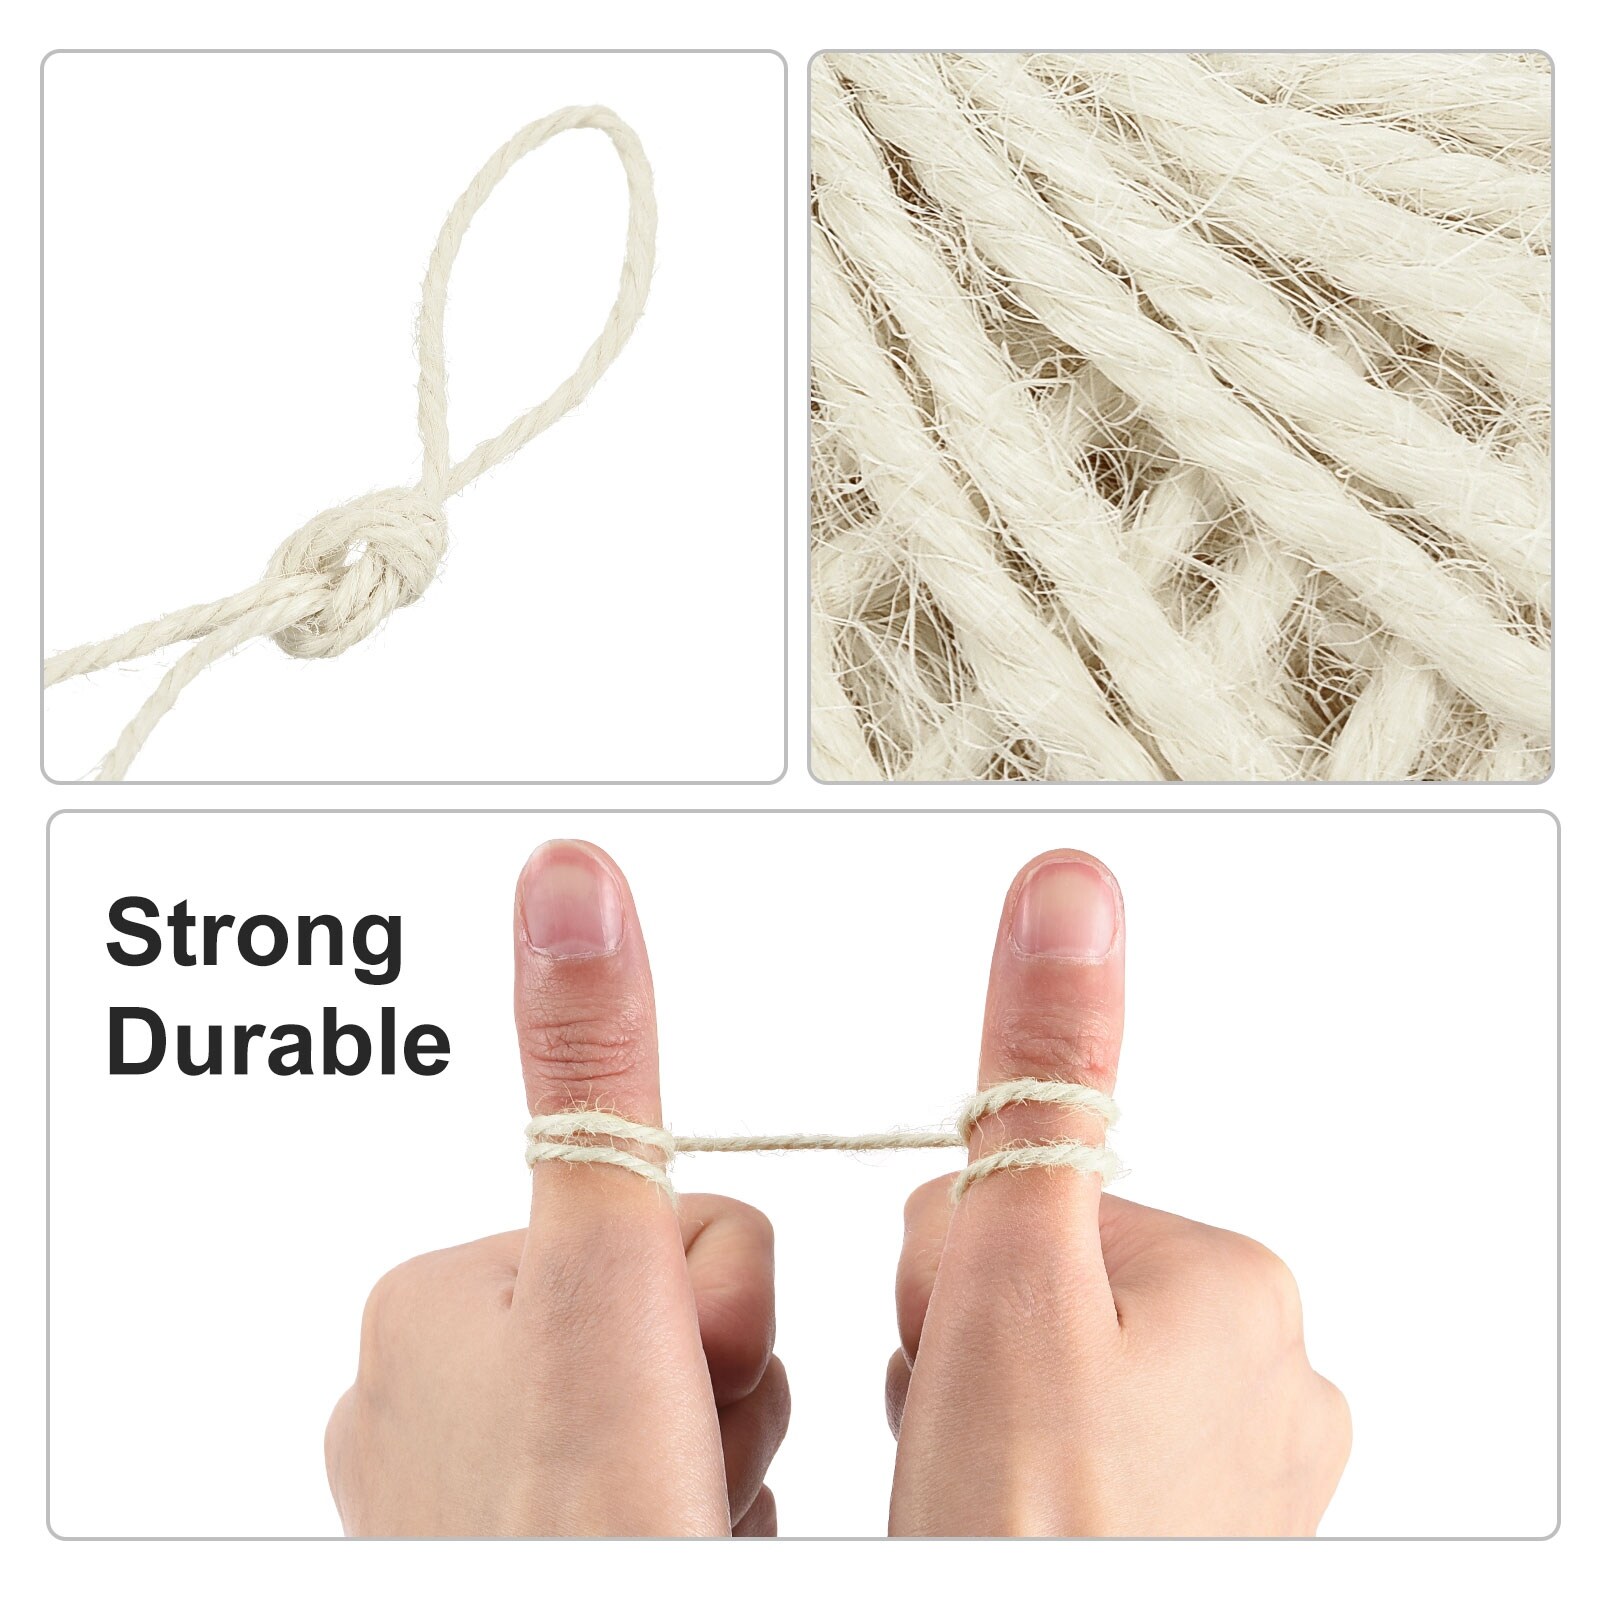 14-Pack Jute Twine String Rope Cord DIY Crafts, 2 Ply 2mm x 32.8 Feet Per  Roll - 2mm x 32.8 Feet - Bed Bath & Beyond - 29115148